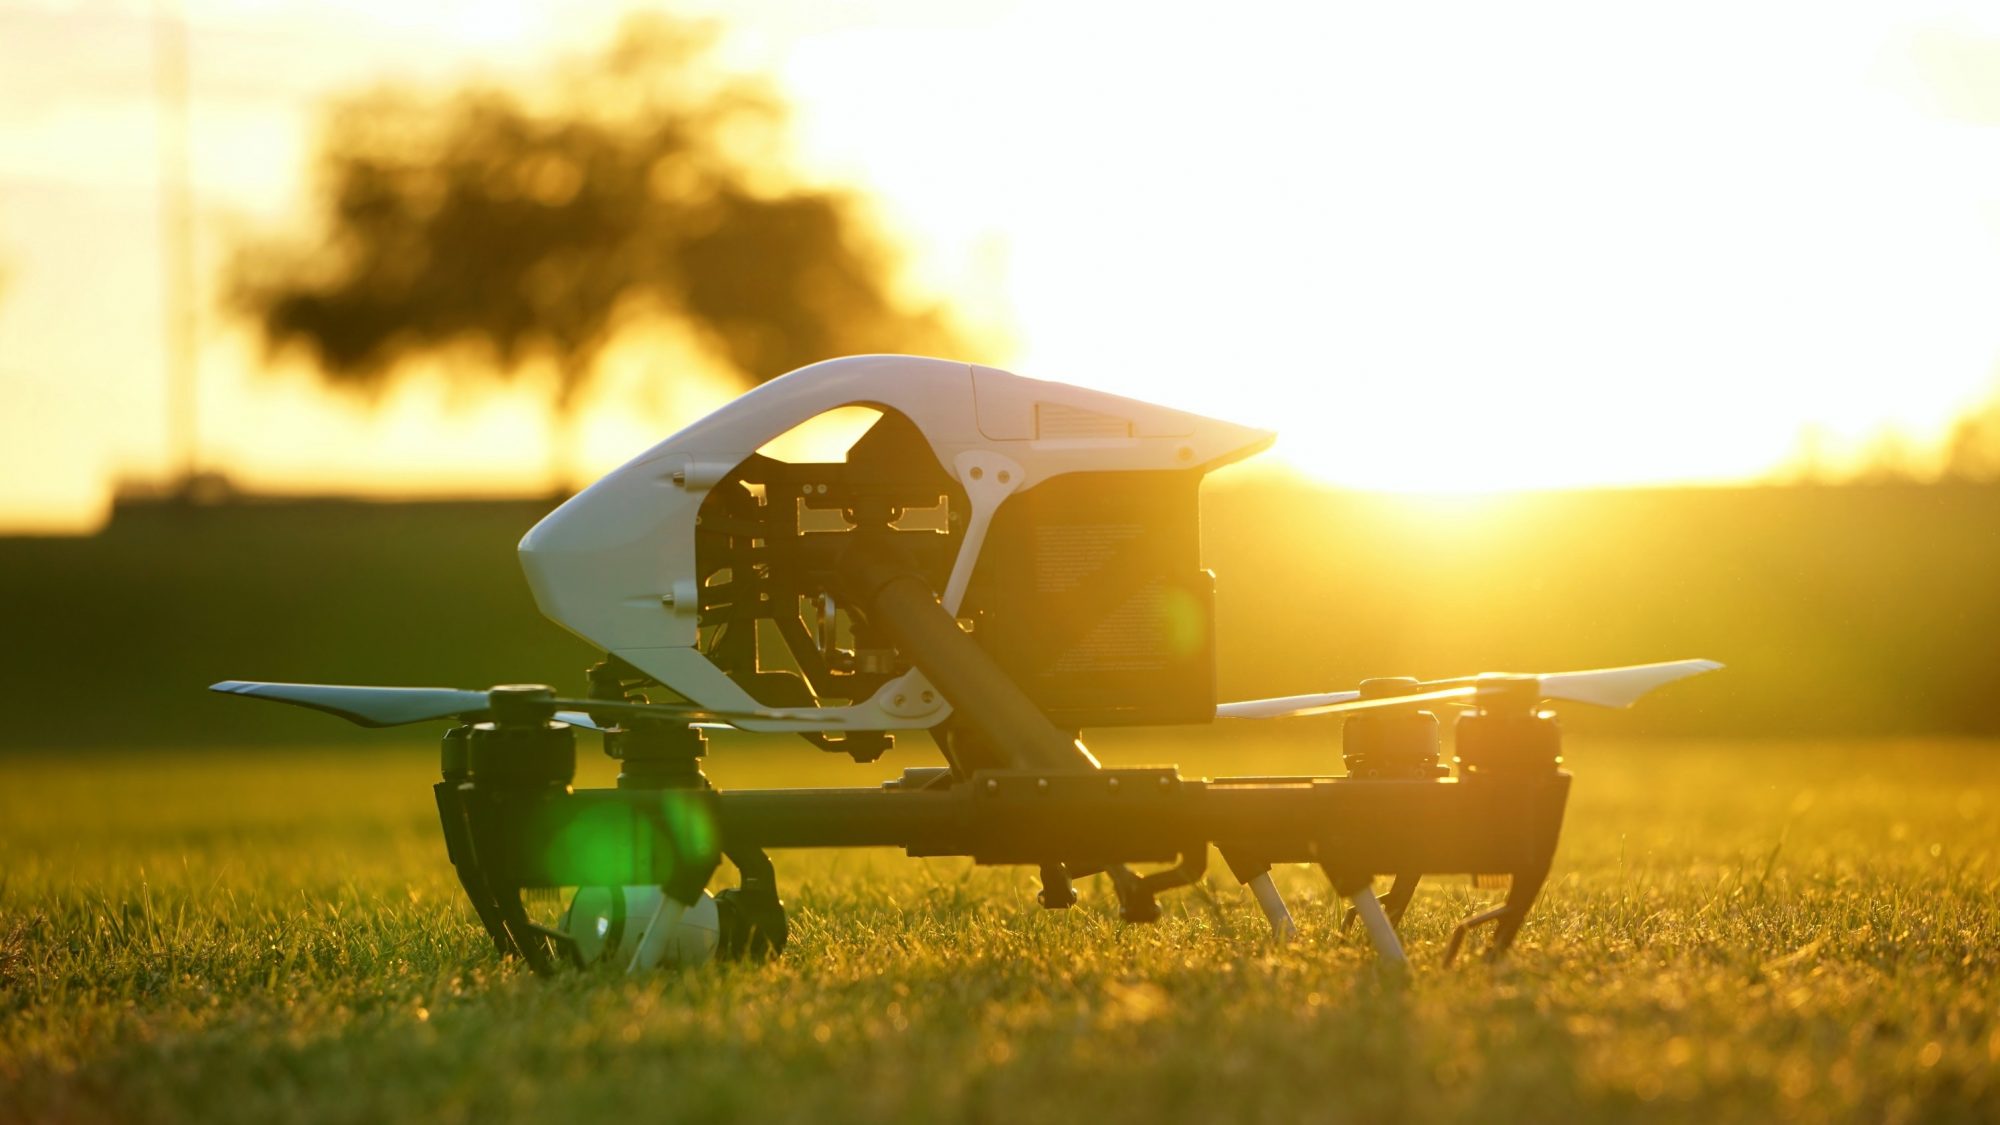 Camera Drone (UAV) Ready to Fly at Sunset